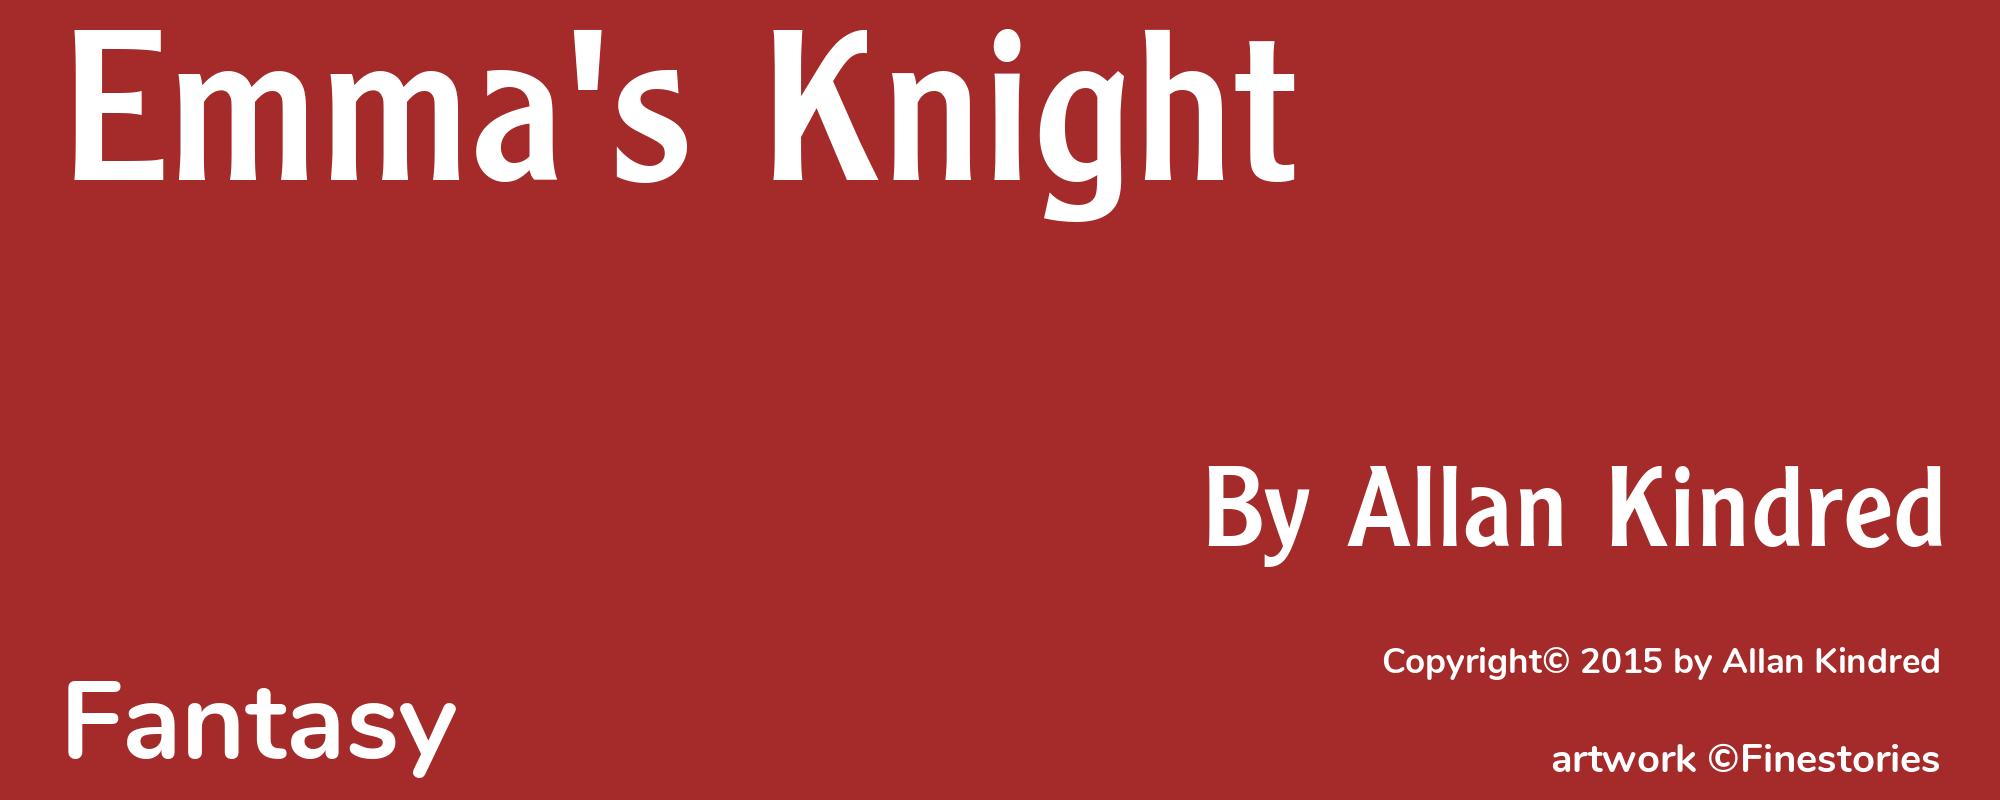 Emma's Knight - Cover